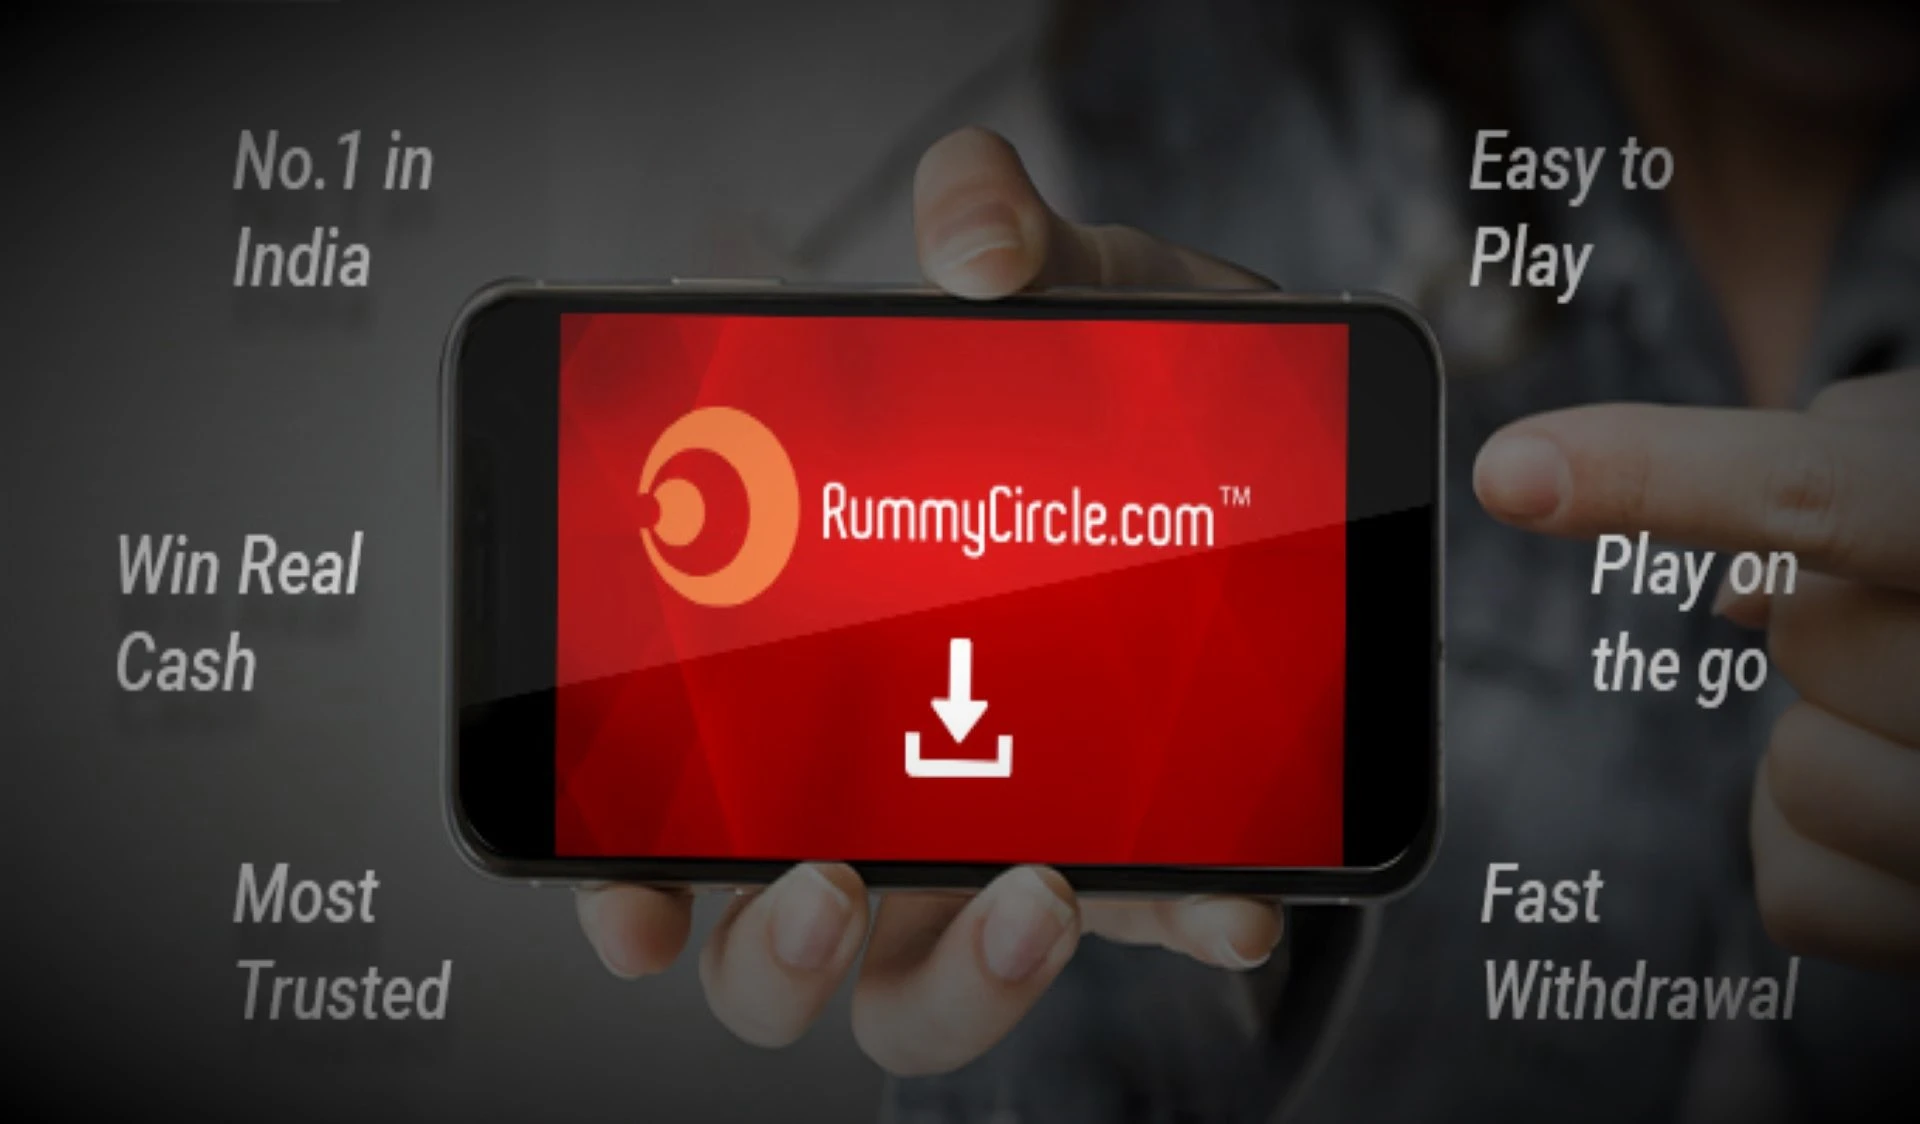 online rummy game app model3 like rummycircle.com